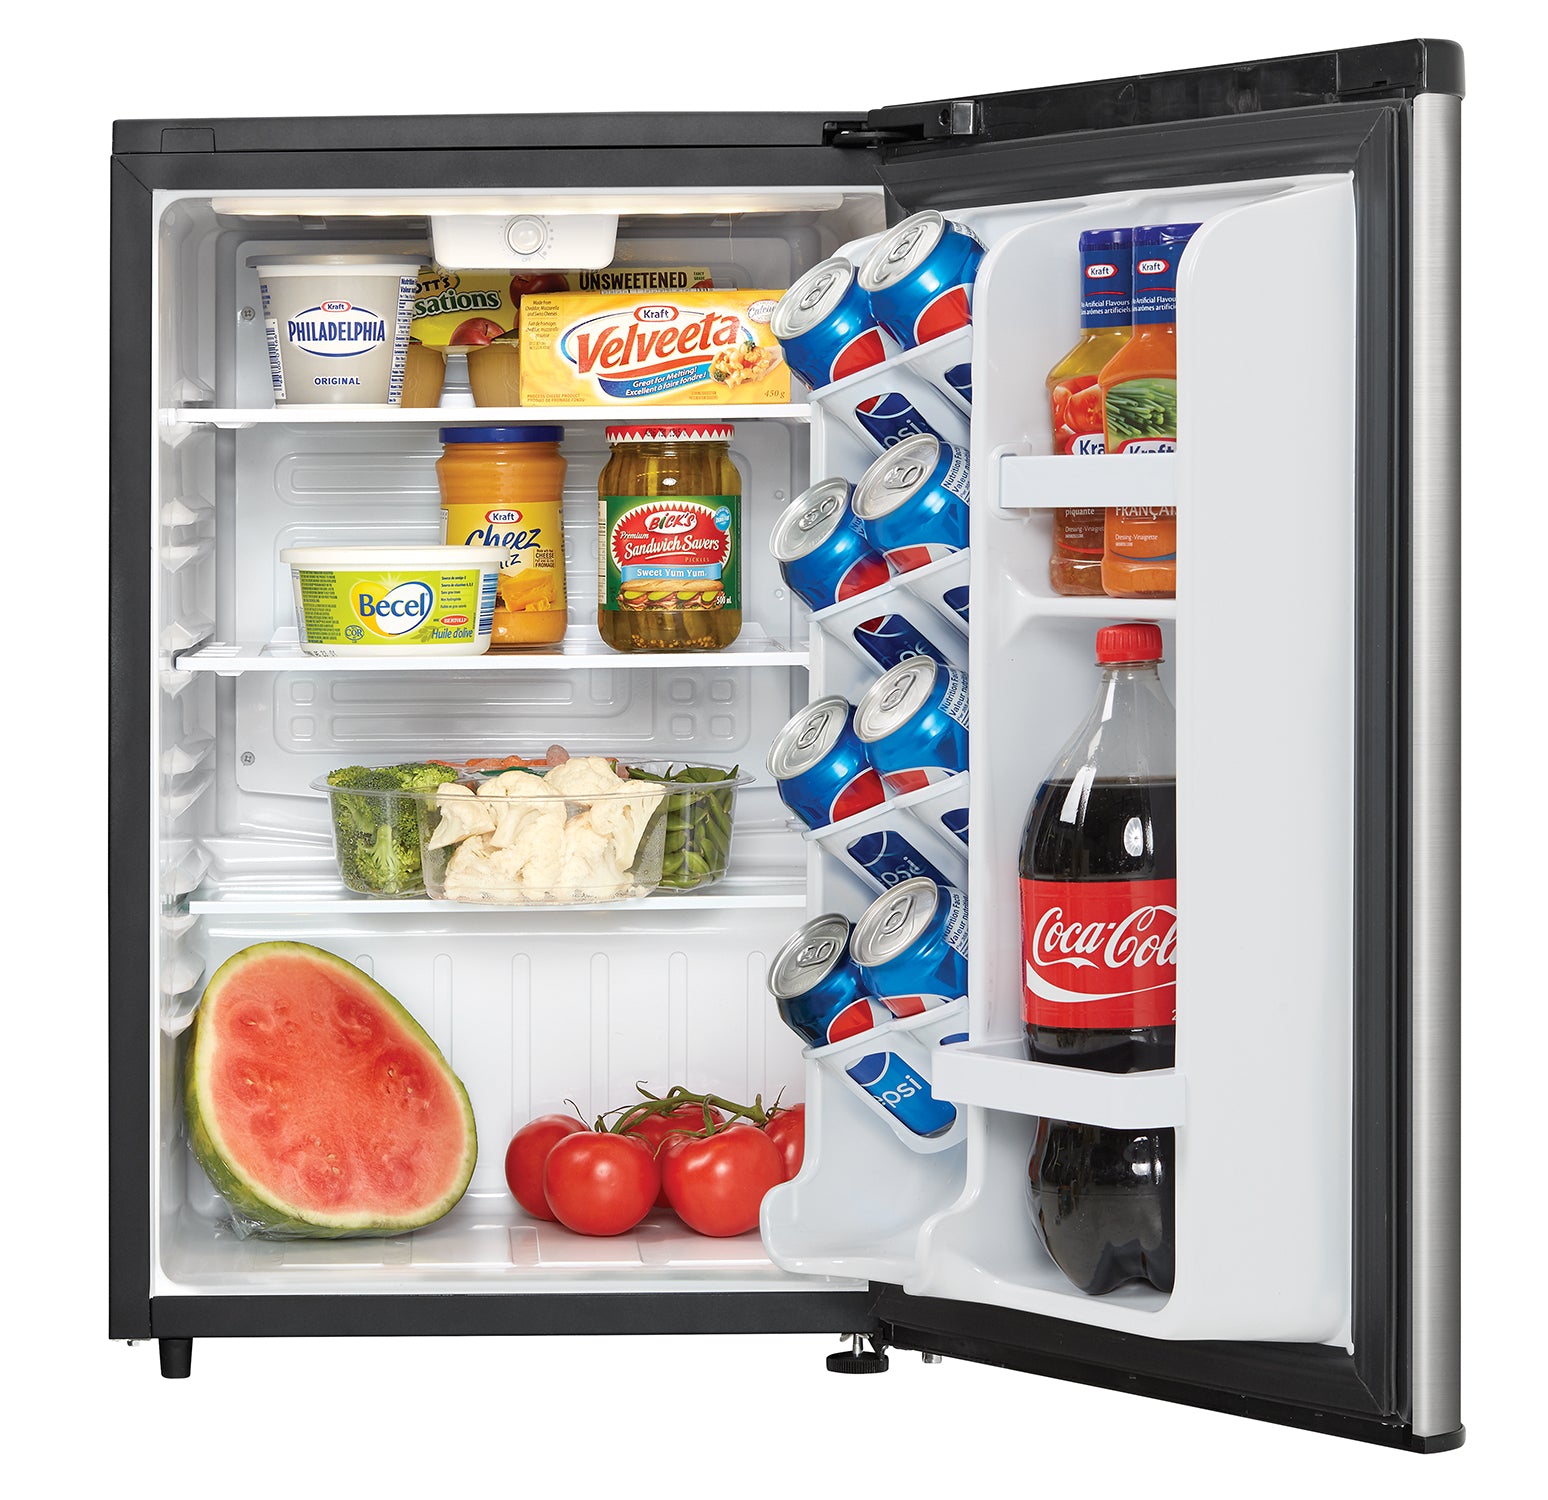 Danby - 17.7 Inch 2.6 cu. ft Mini Fridge Refrigerator in Stainless - DAR026A2BSLDB